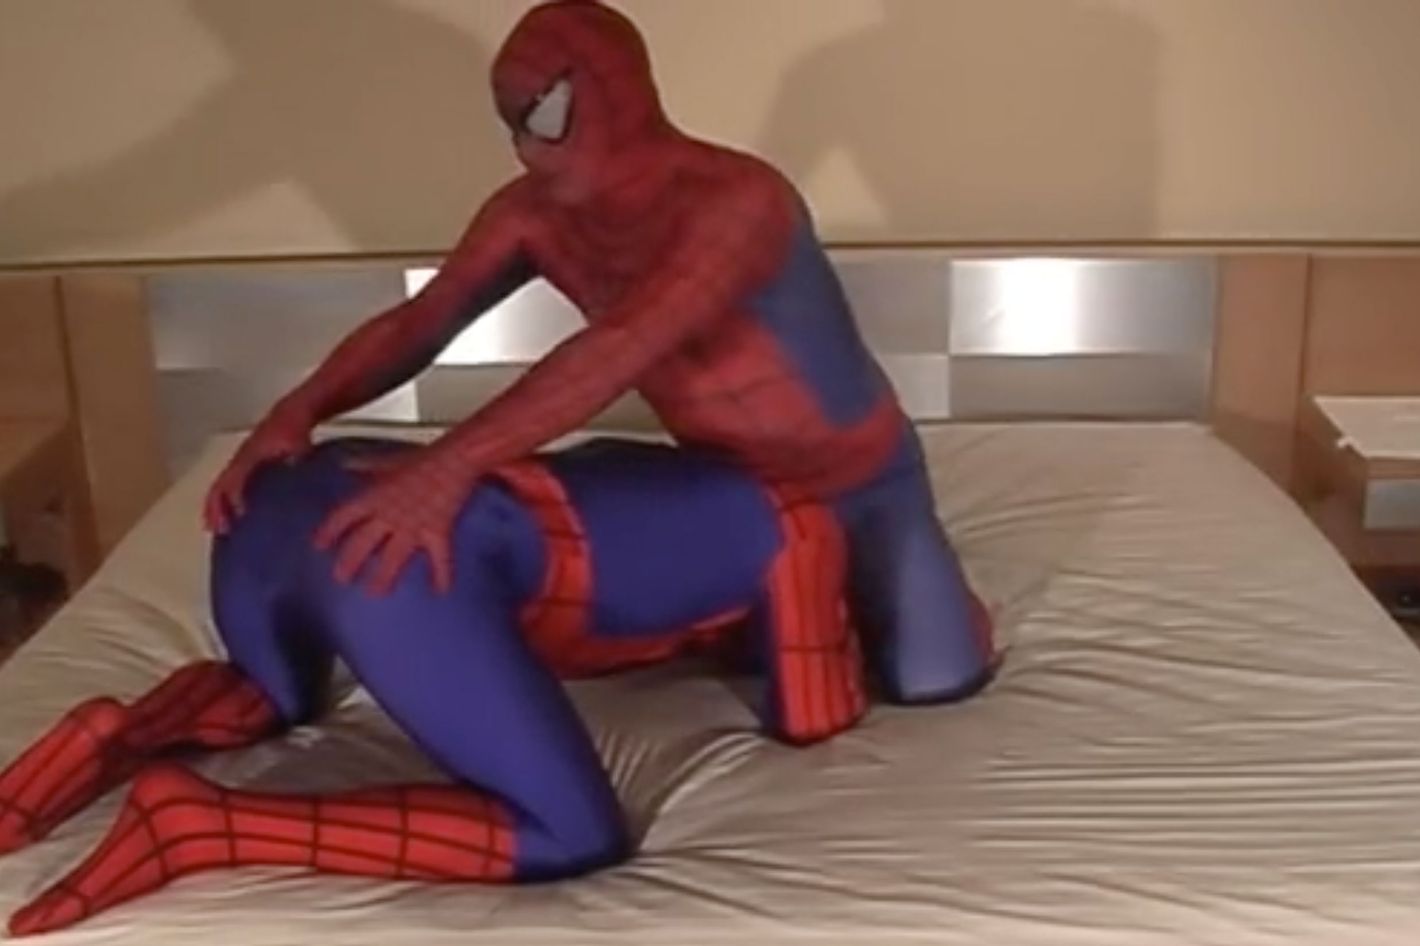 Spider Mansex - Who Made the Viral Spider-Man Spanking Video?